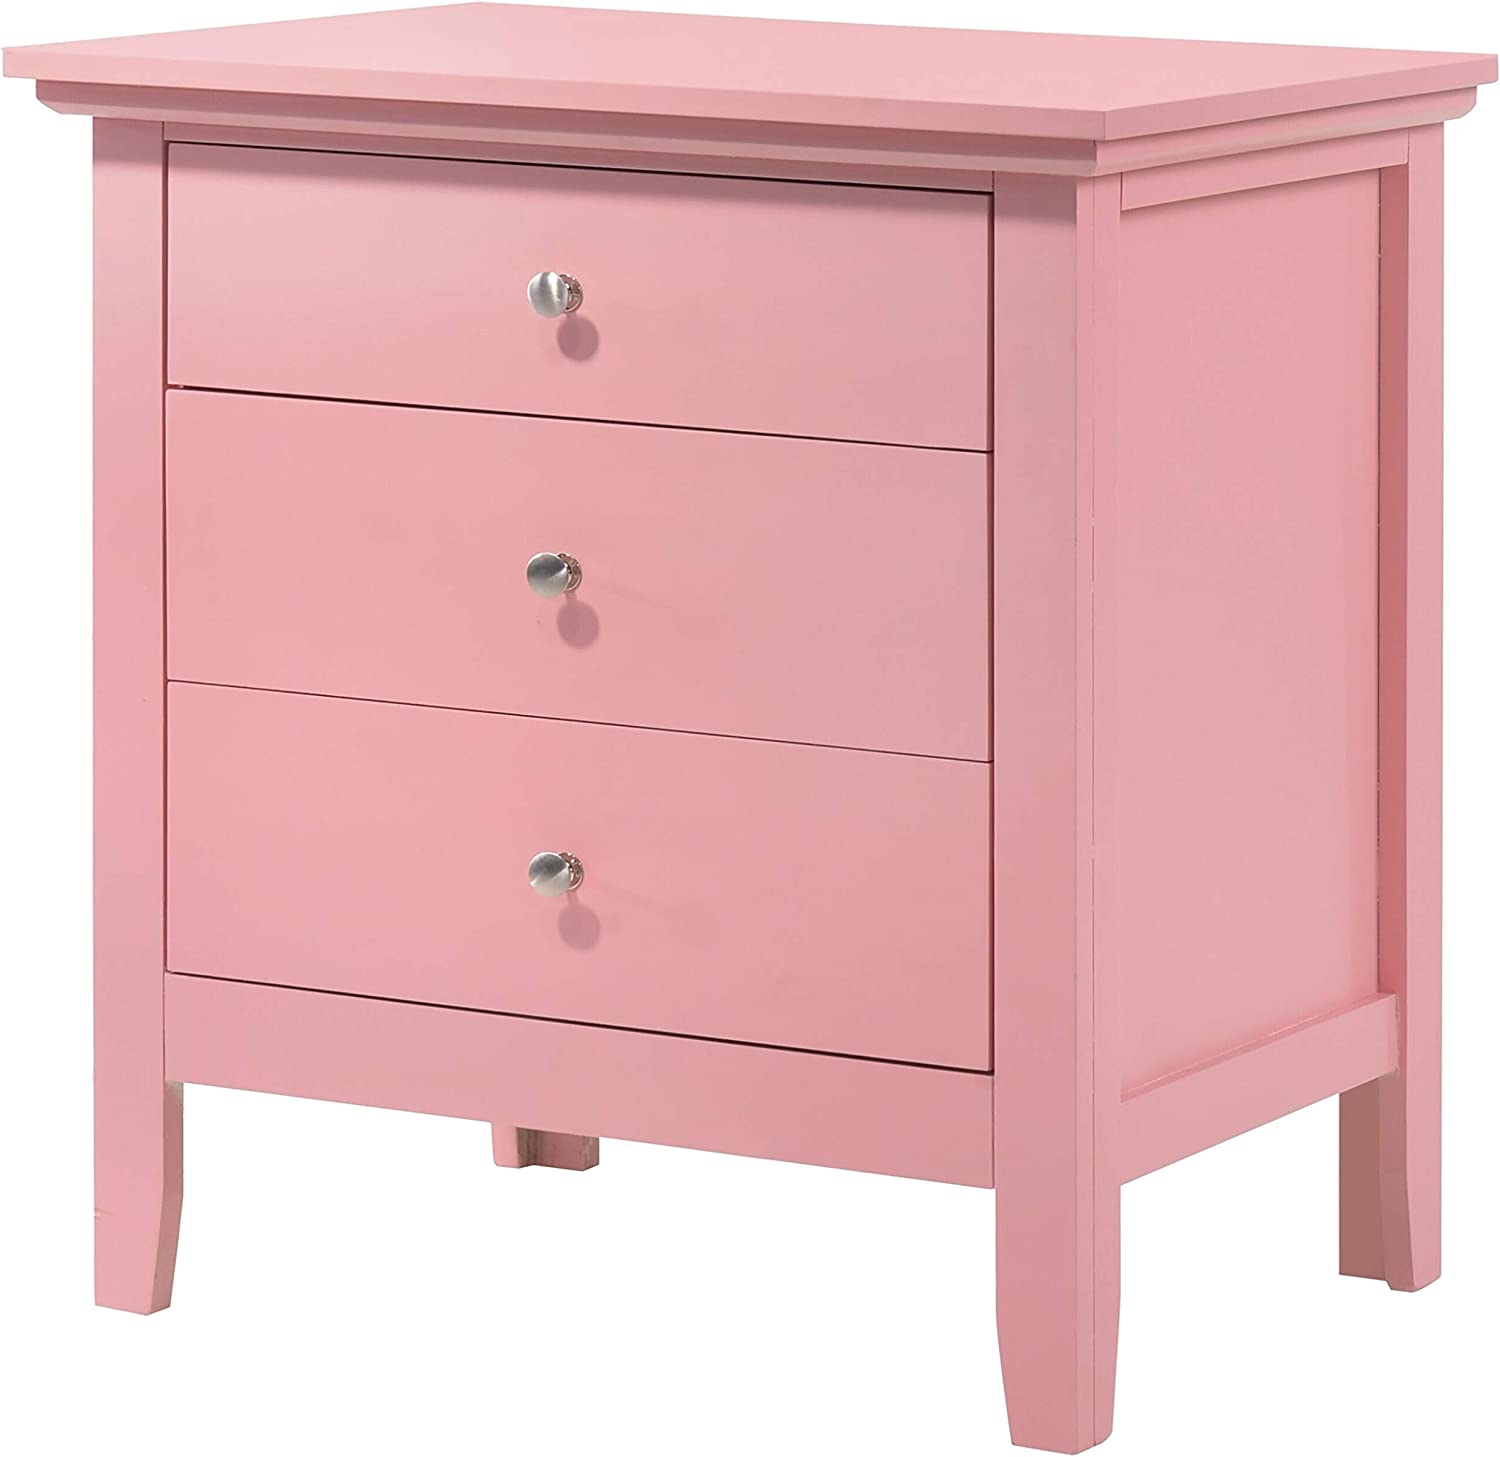 Overstock Hammond 3-Drawer Wooden Nightstand Pink Painted